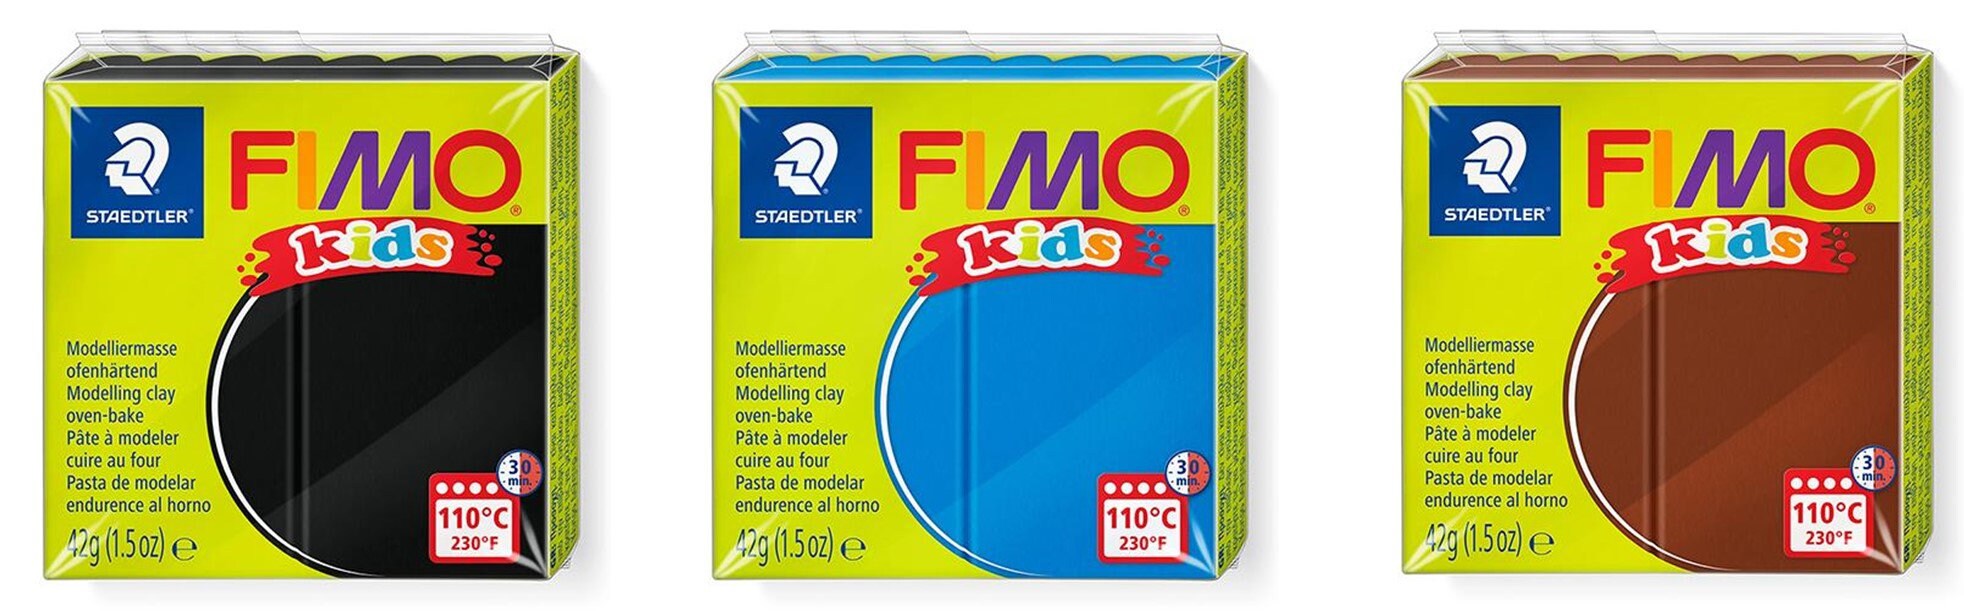 Pâte Fimo Kids 42g